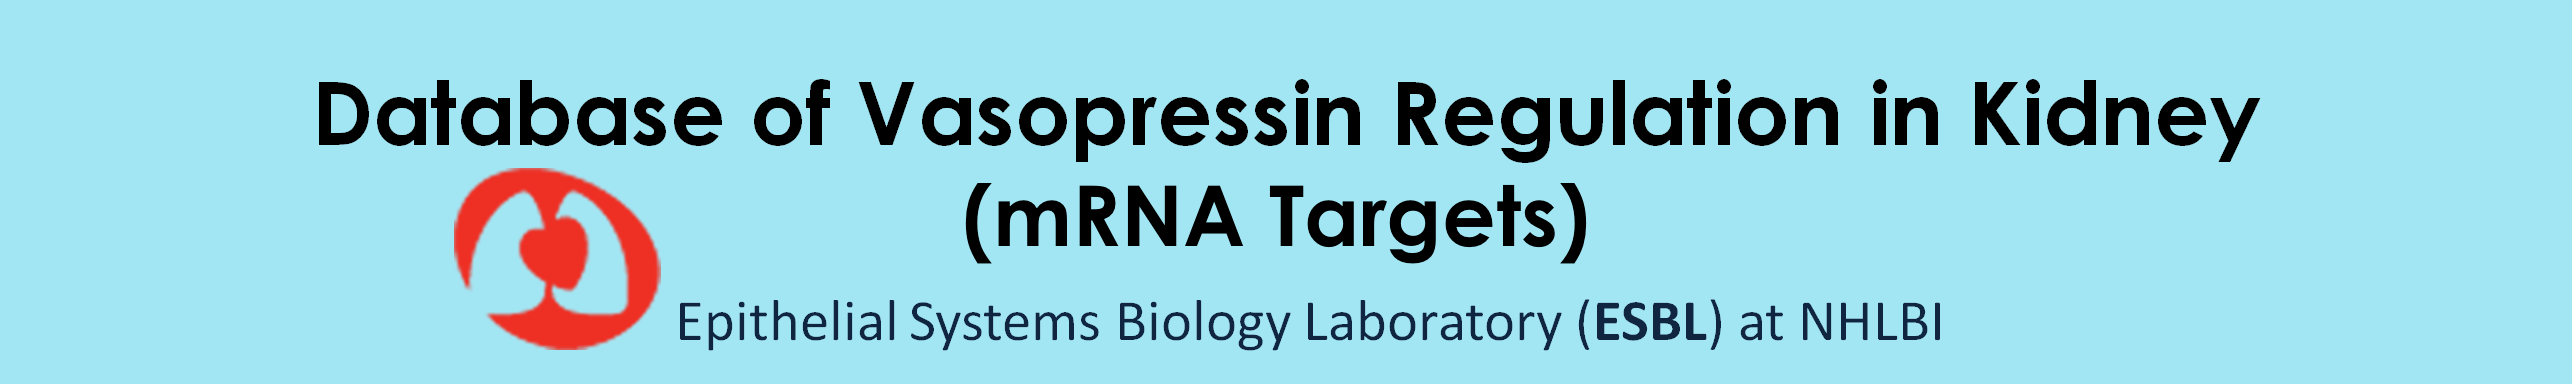 Database of Vasopressin Regulation in Kidney (mRNA Targets)